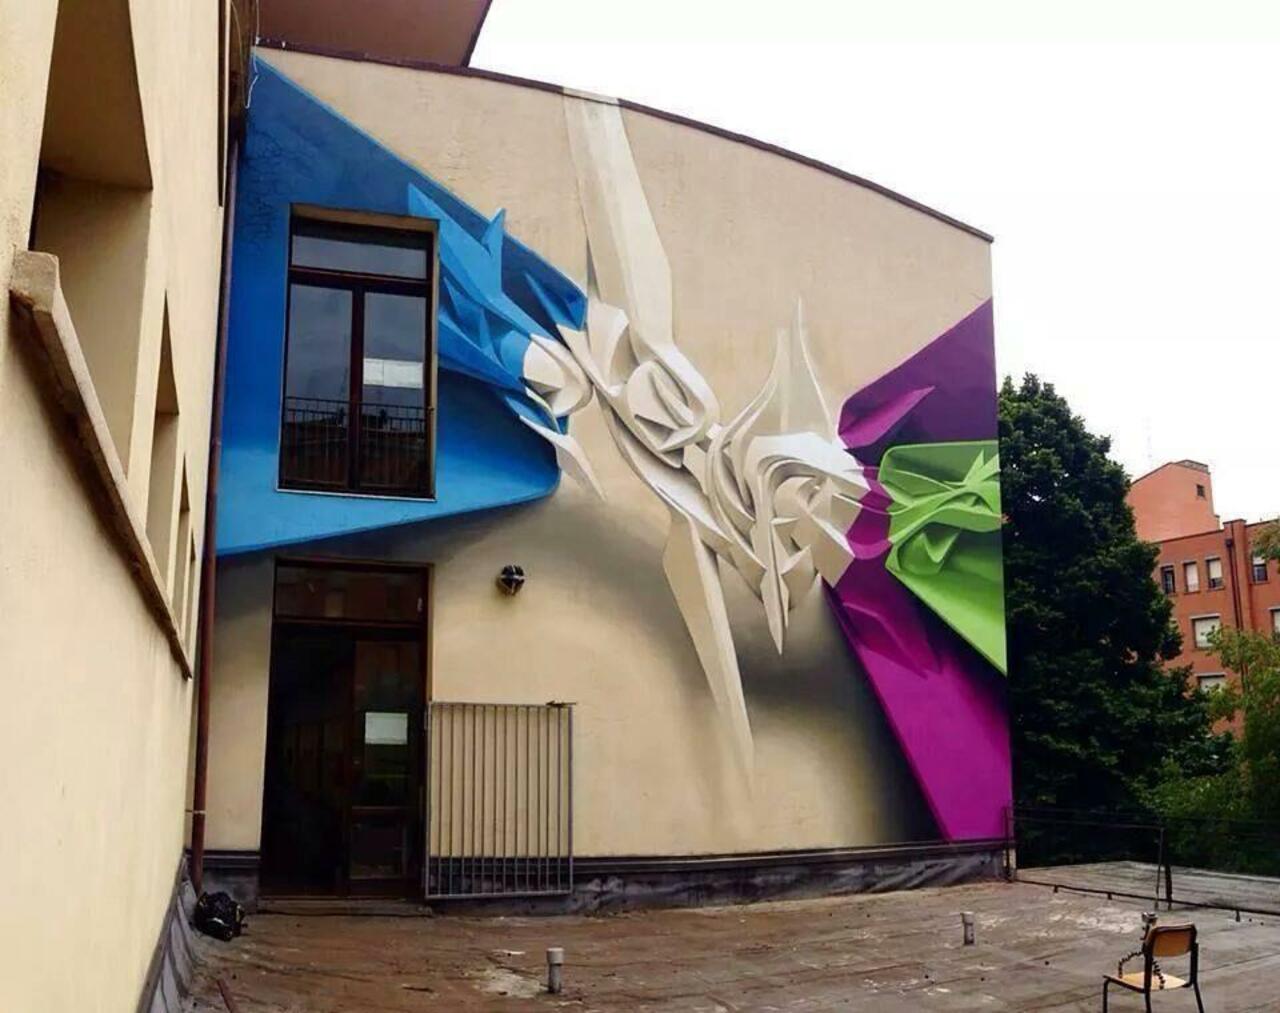 RT @designopinion: Artist @peeta3D amazing Street Art piece in Italy #art #mural #graffiti #streetart http://t.co/htQPxpFuQu